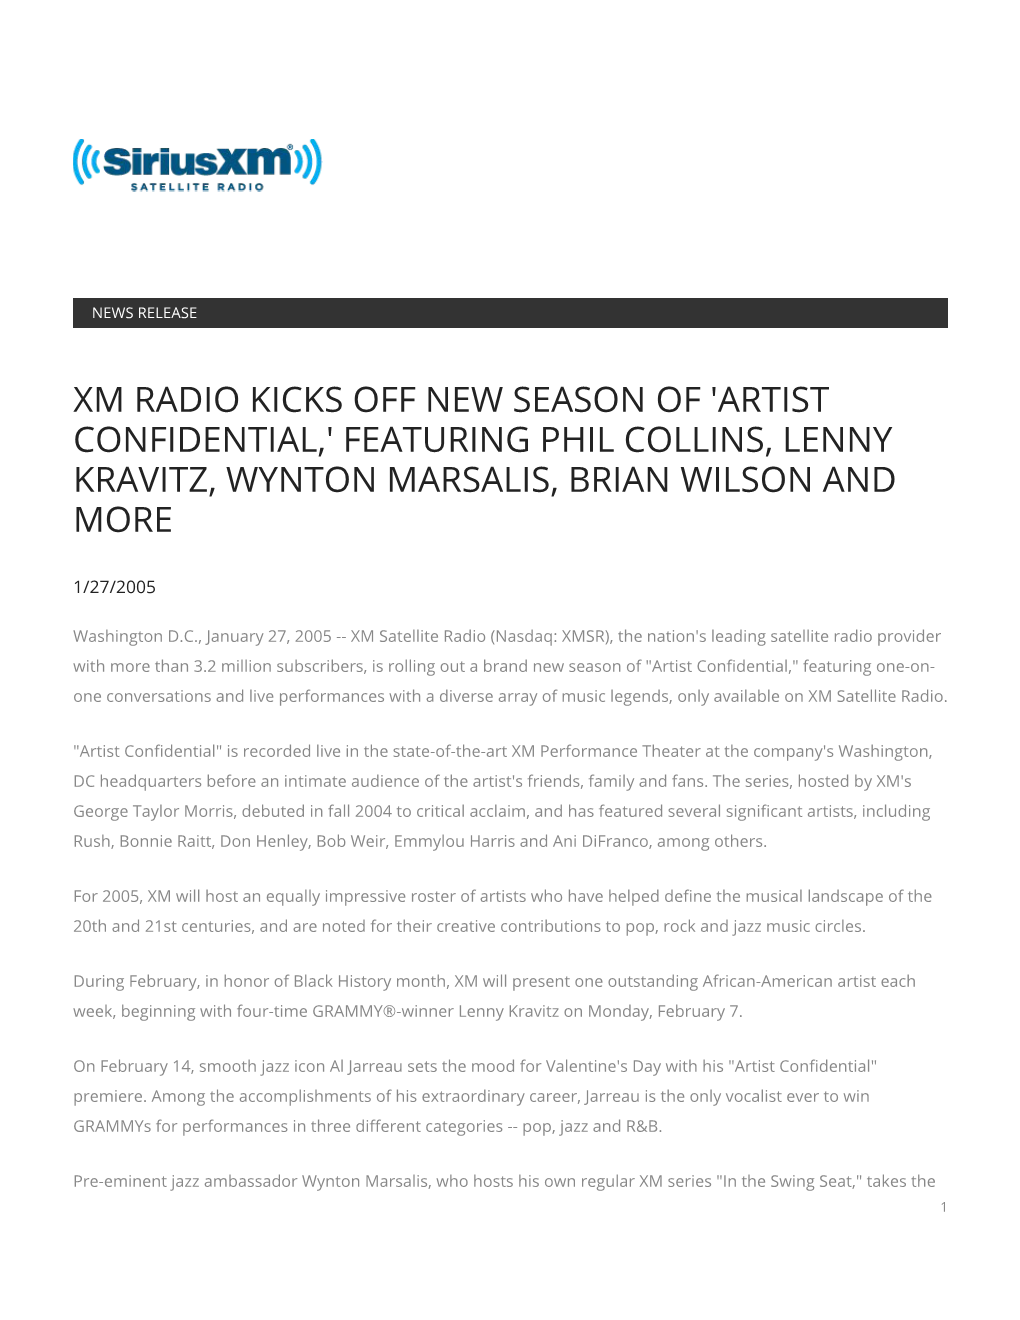 Xm Radio Kicks Off New Season of 'Artist Confidential,' Featuring Phil Collins, Lenny Kravitz, Wynton Marsalis, Brian Wilson and More